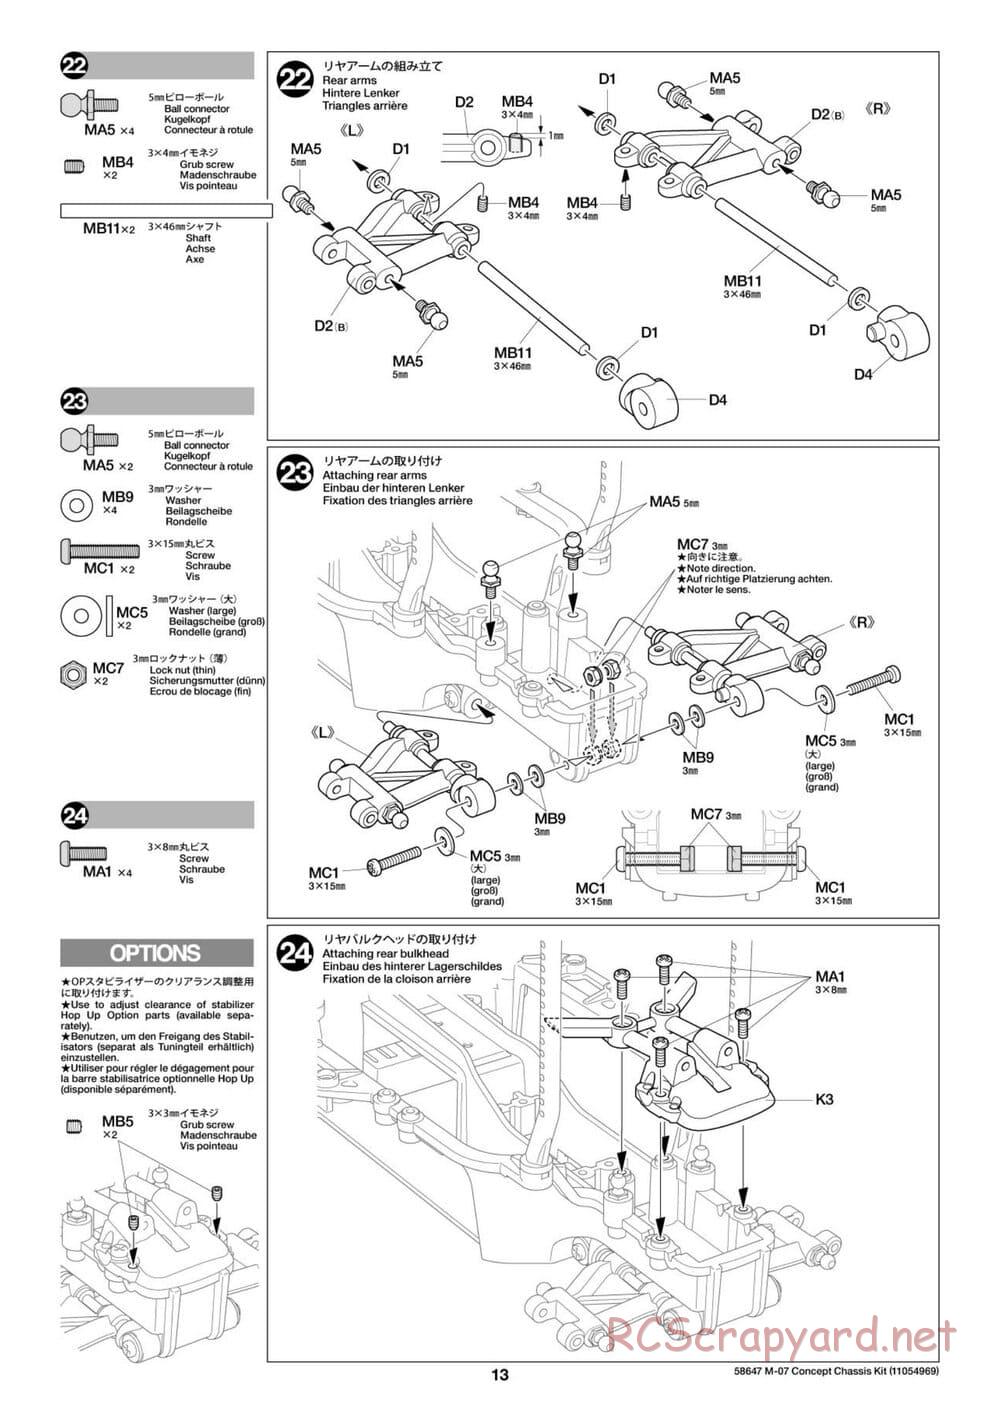 Tamiya - M-07 Concept Chassis - Manual - Page 13